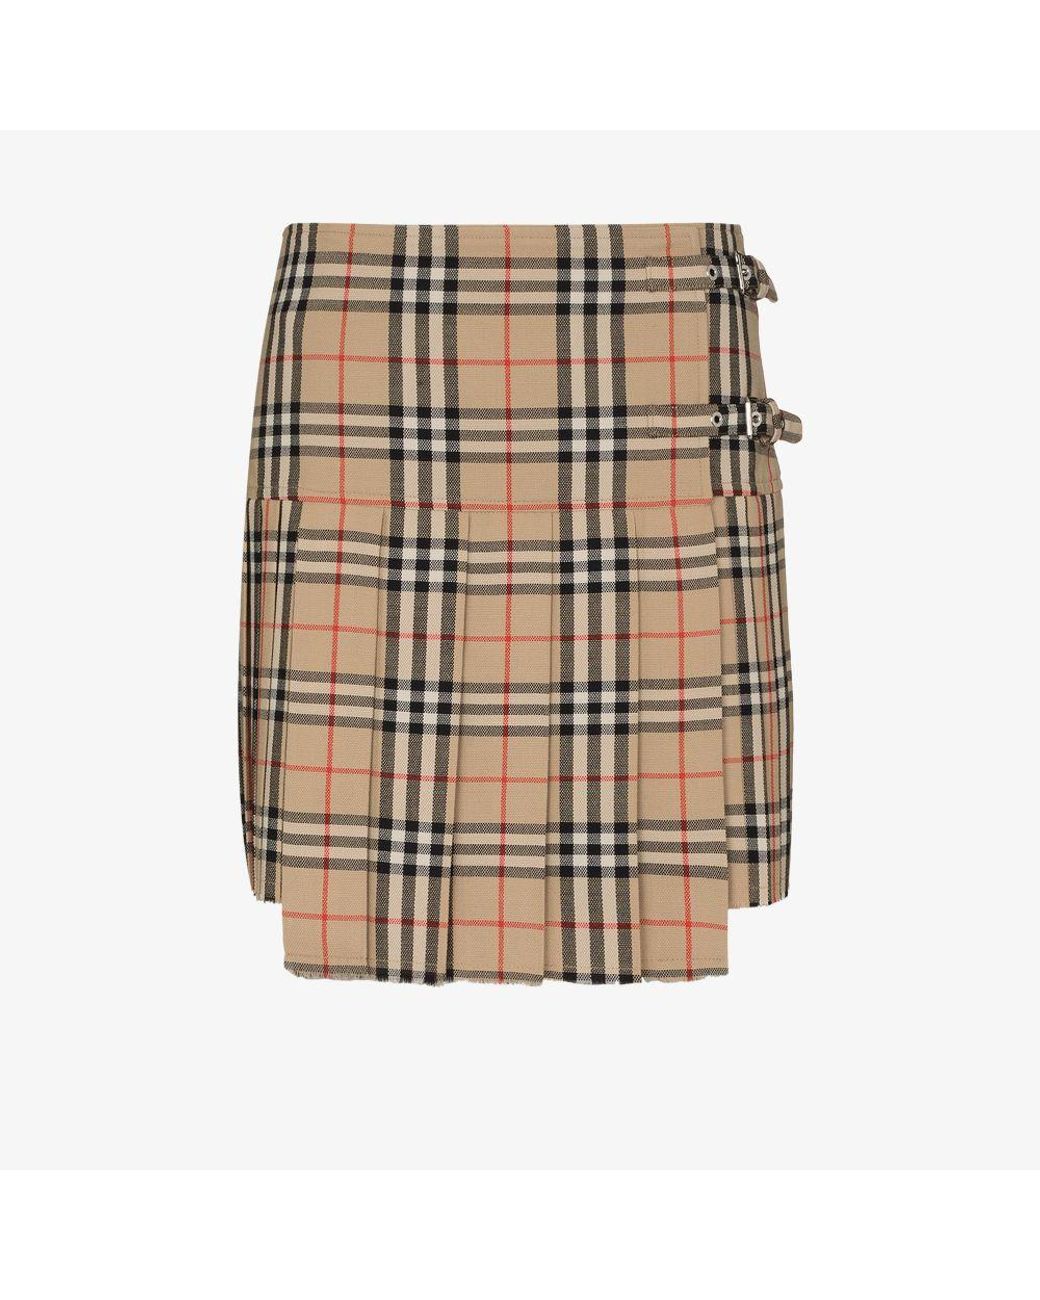 Burberry Wool Zoe Vintage Check Mini Skirt in Brown - Lyst